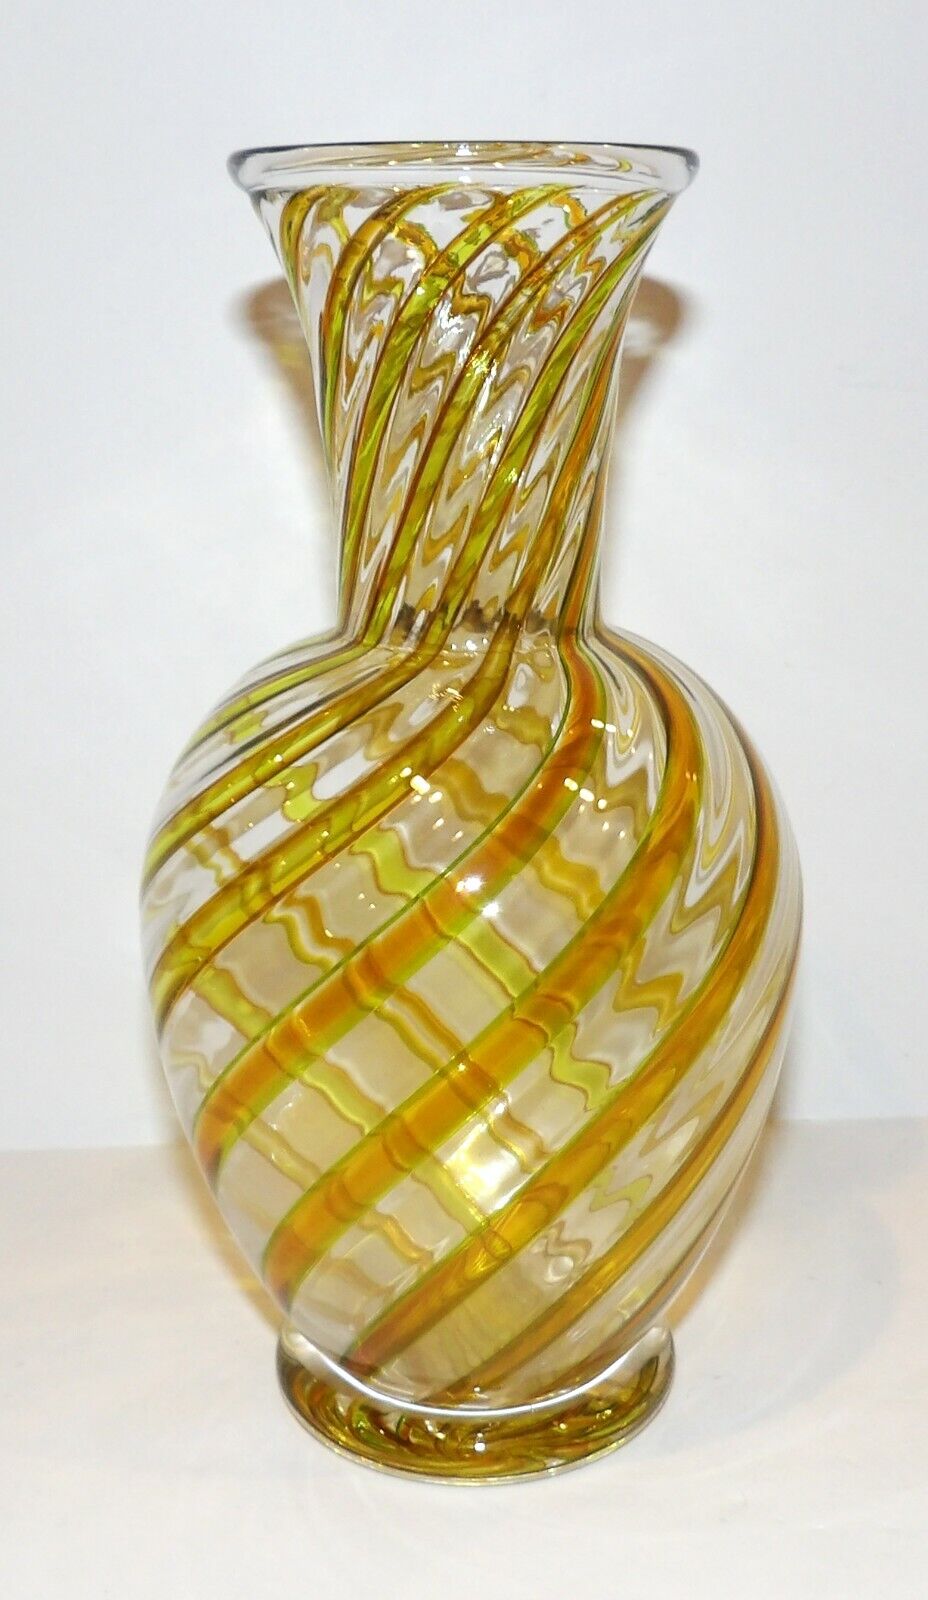 EXQUISITE 2000 MICHAEL EGAN VERMONT ART GLASS YELLOW/ORANGE SWIRL 8 1/2